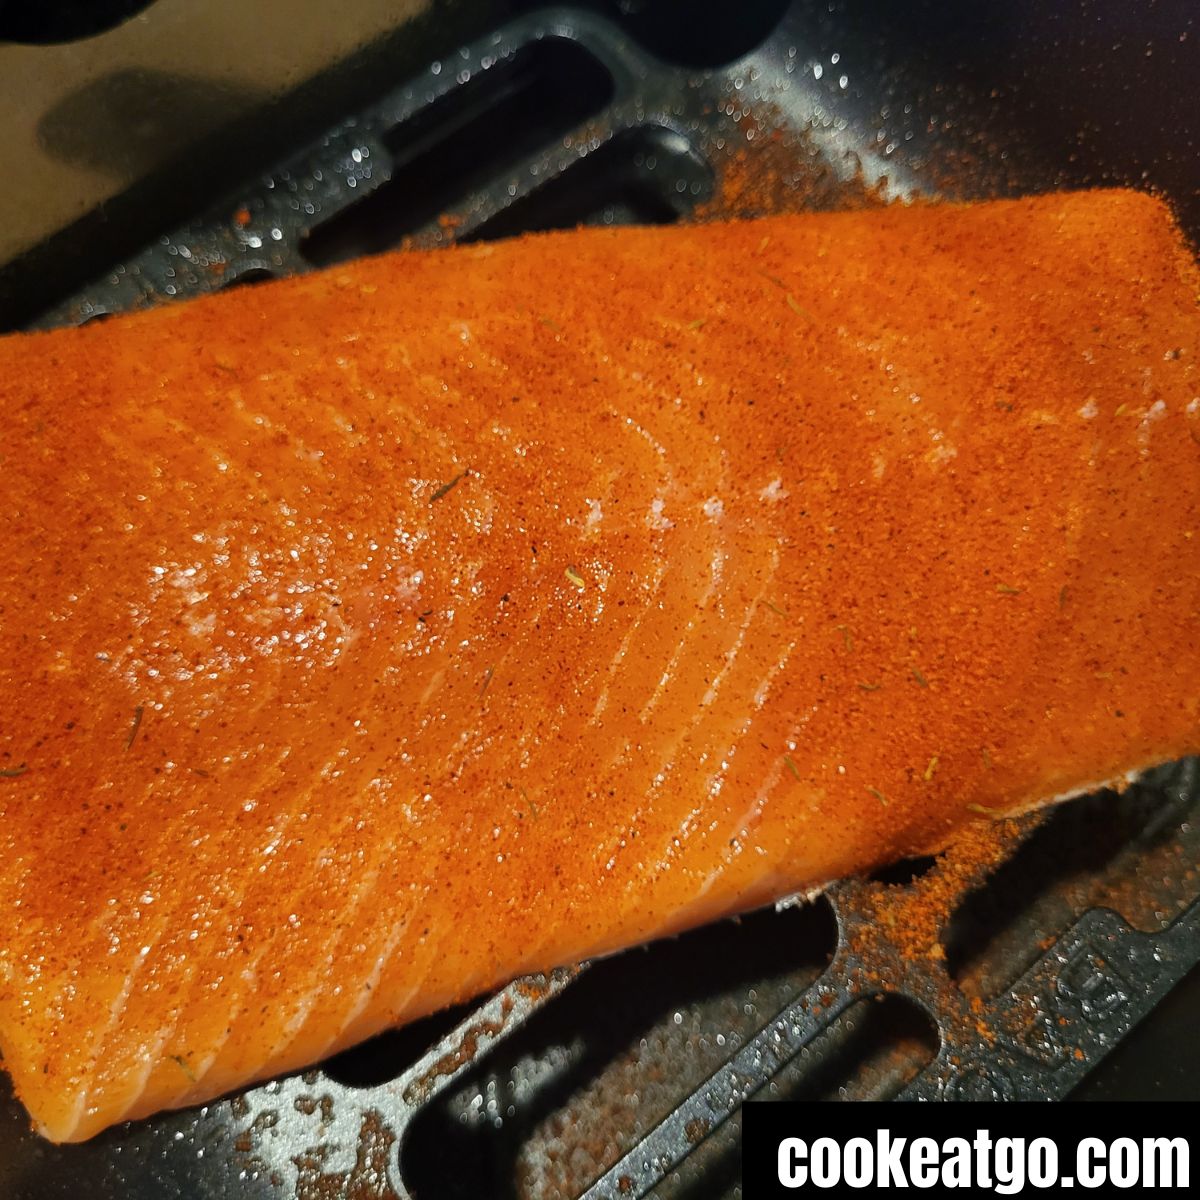 Salmon Fillet seasoned with trader joes rub in air fryer basket before cooking